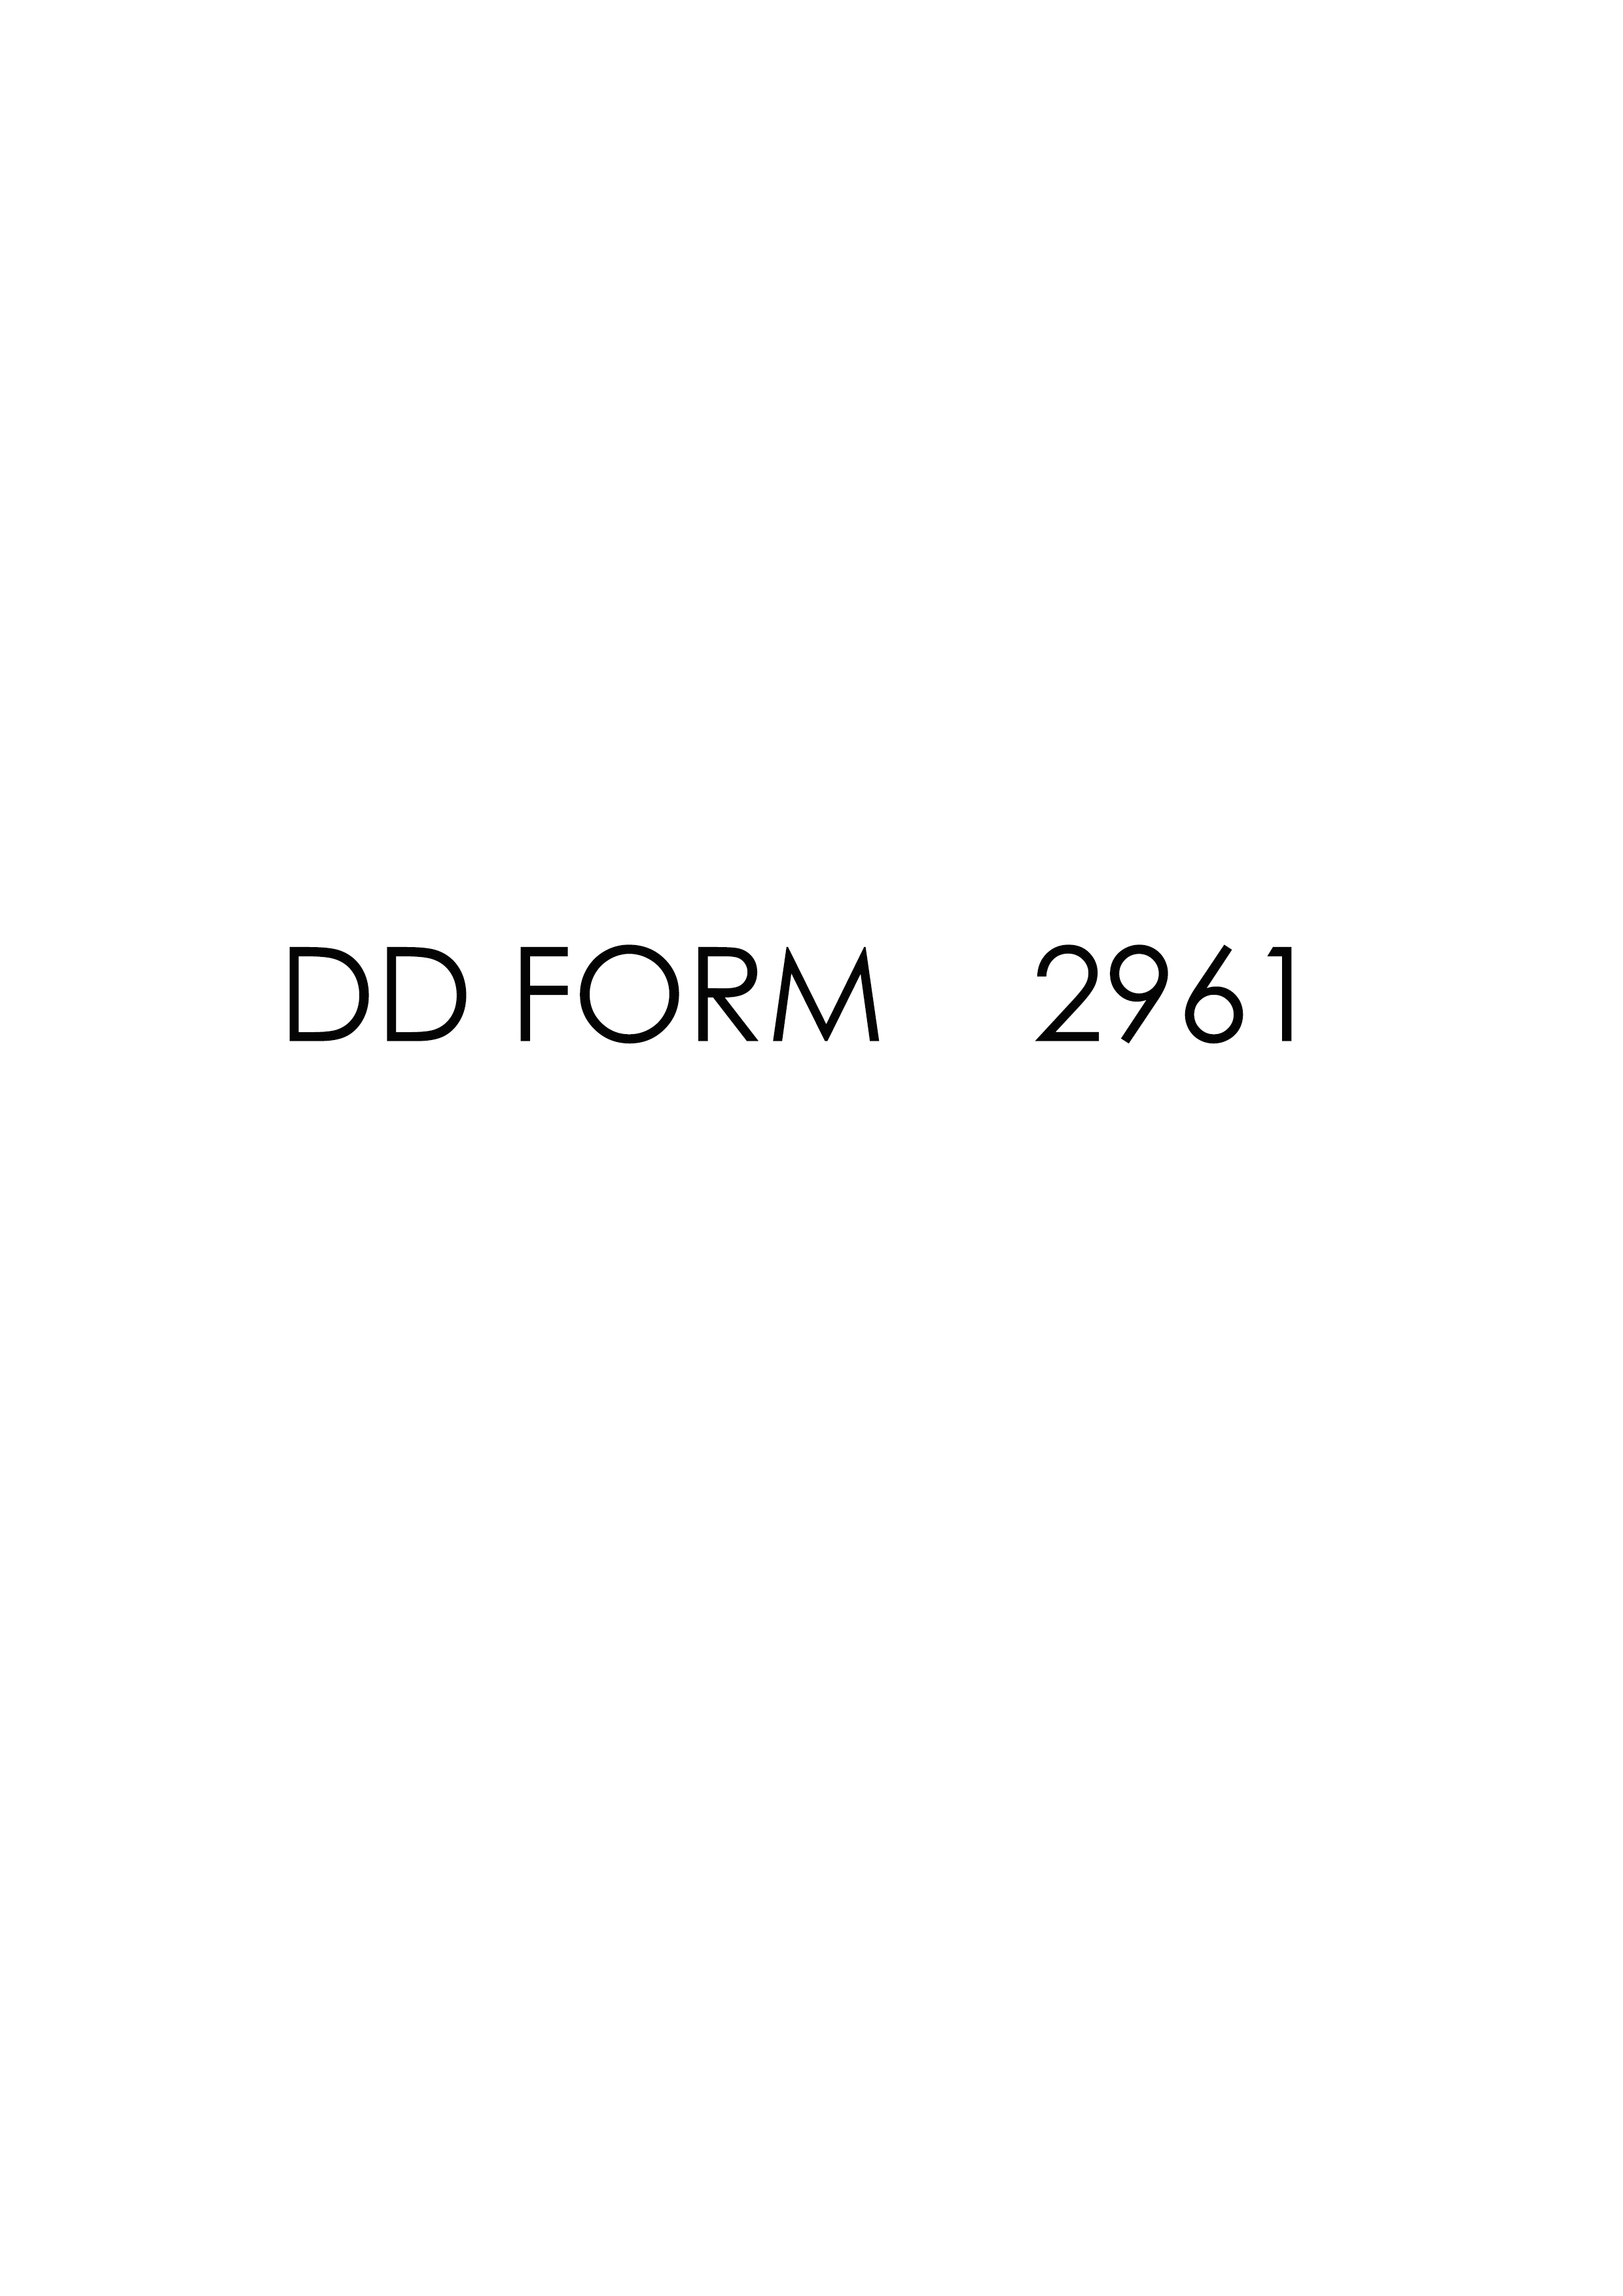 Download dd form 2961